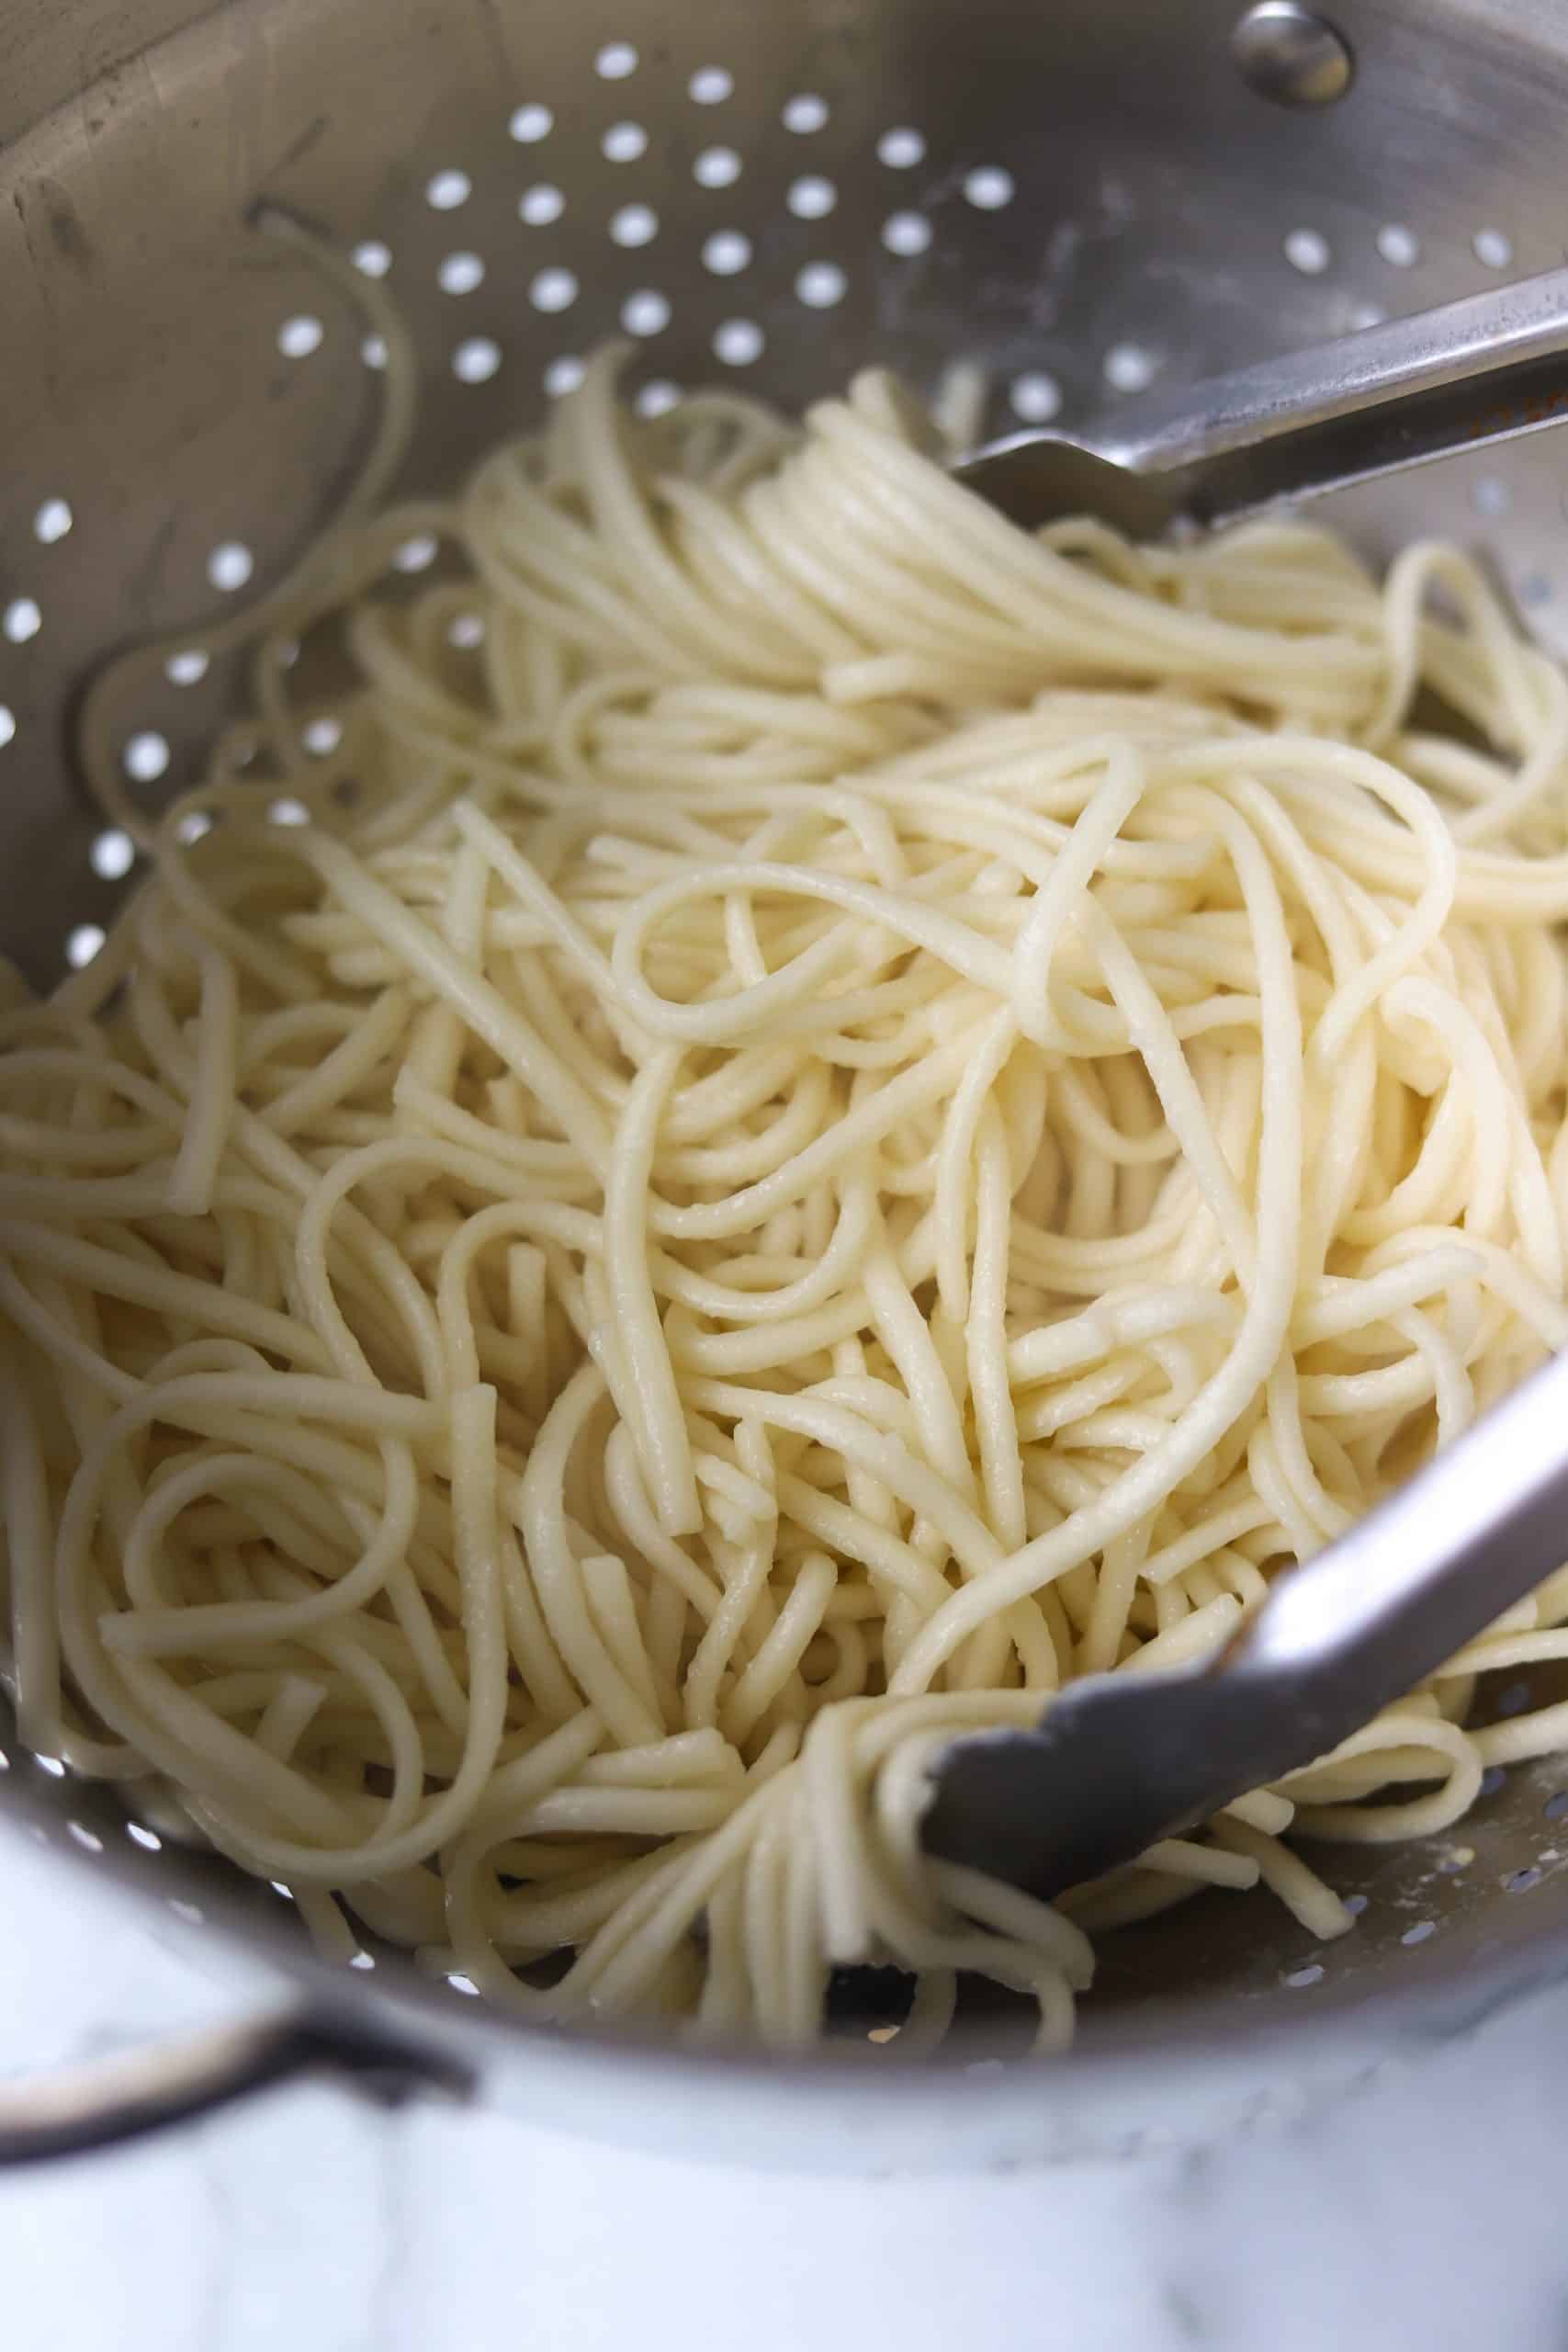 Spicy dan dan noodles in a white dish